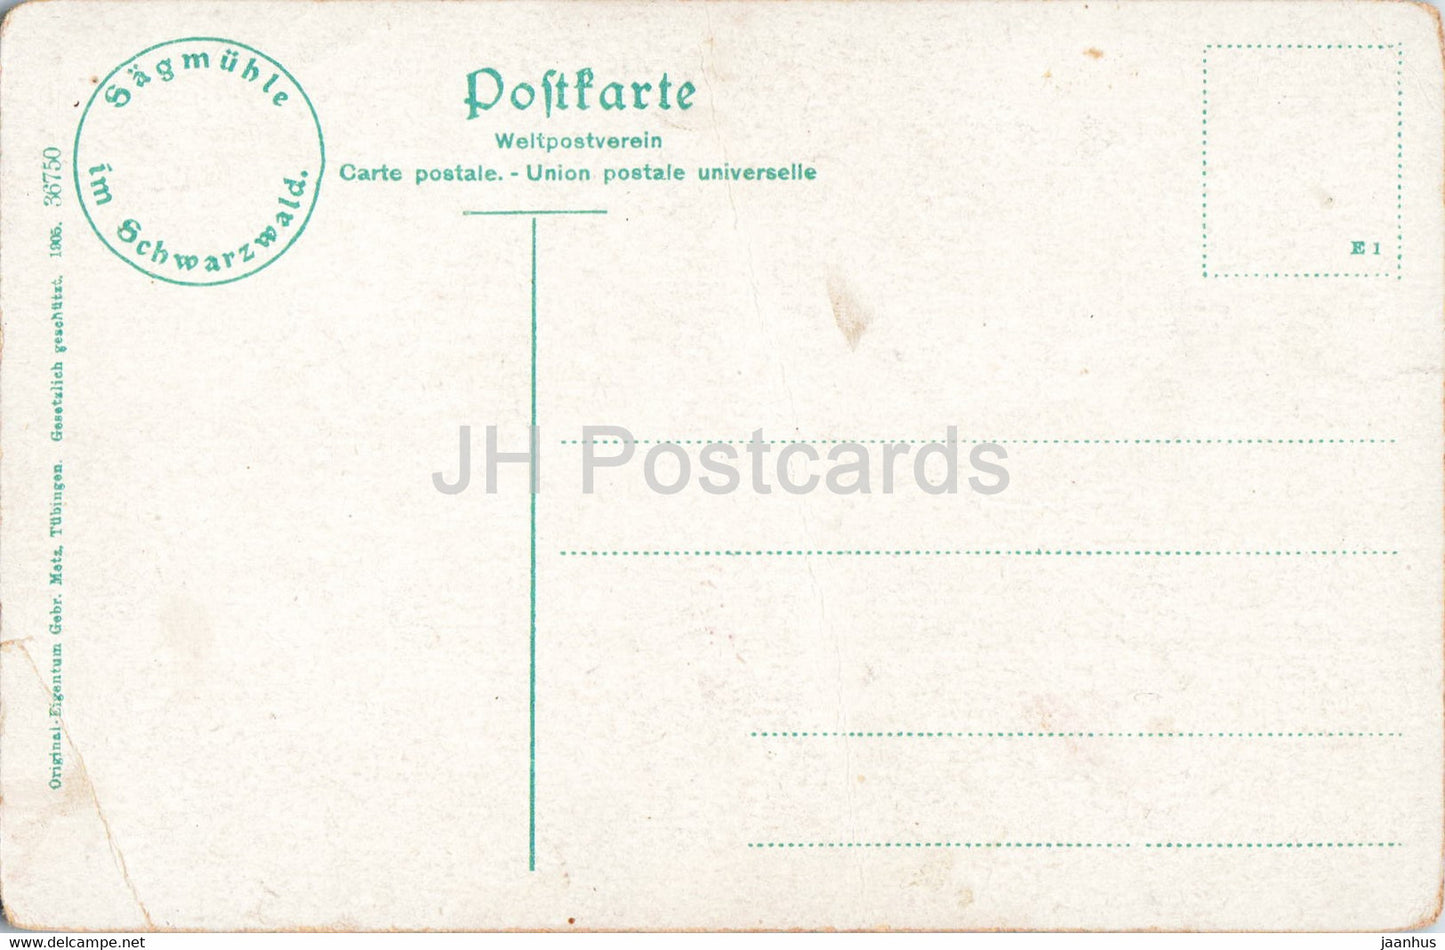 Sagmuhle im Schwarzwald - 36750 - old postcard - Germany - unused